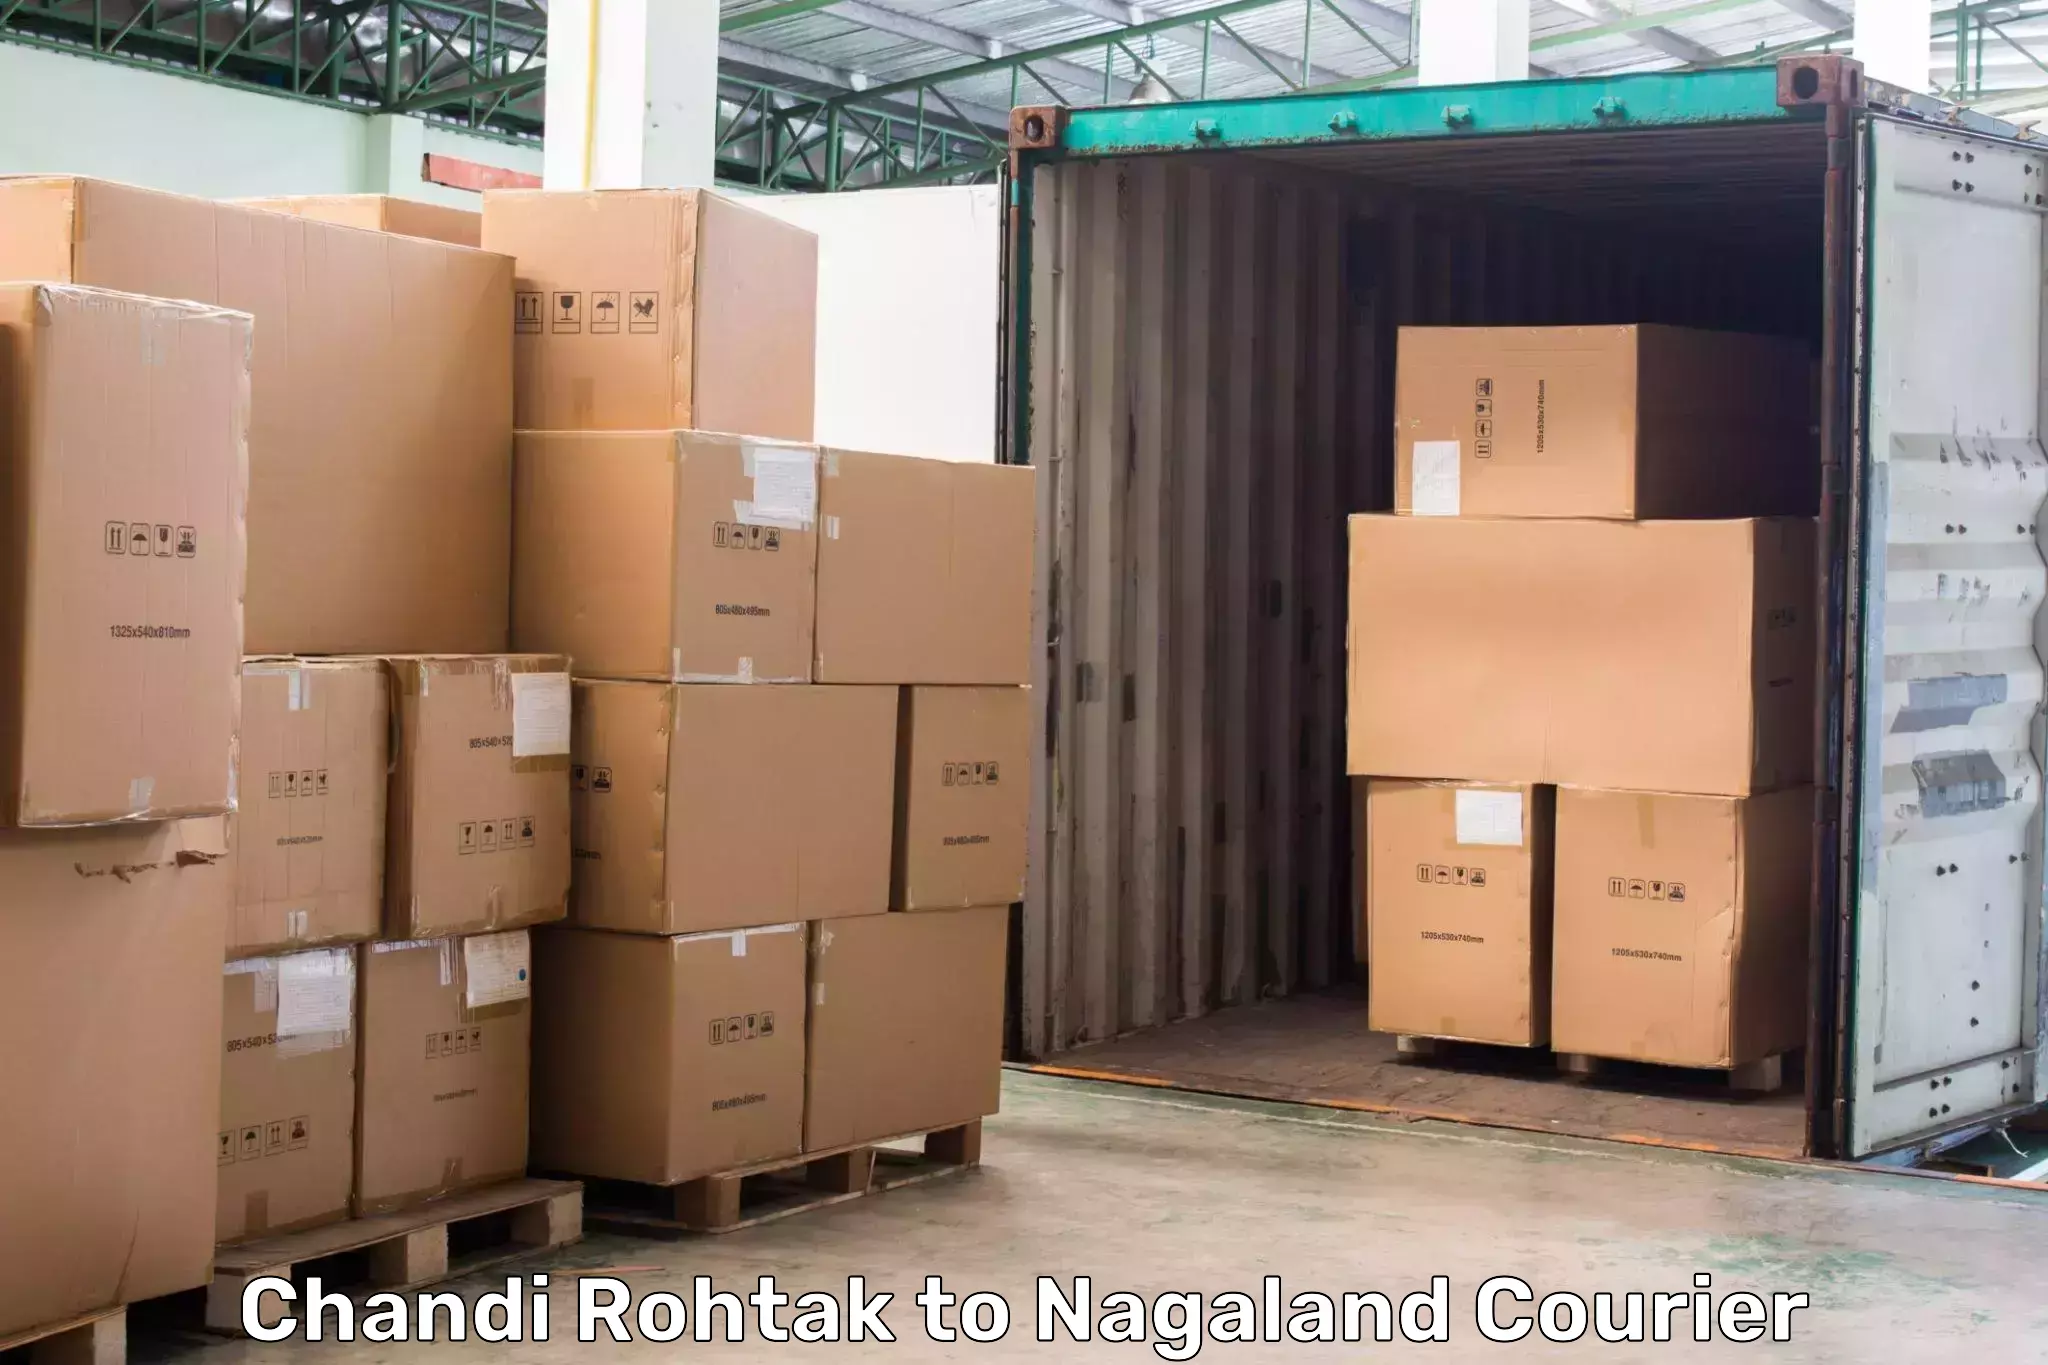 Courier service innovation Chandi Rohtak to Dimapur